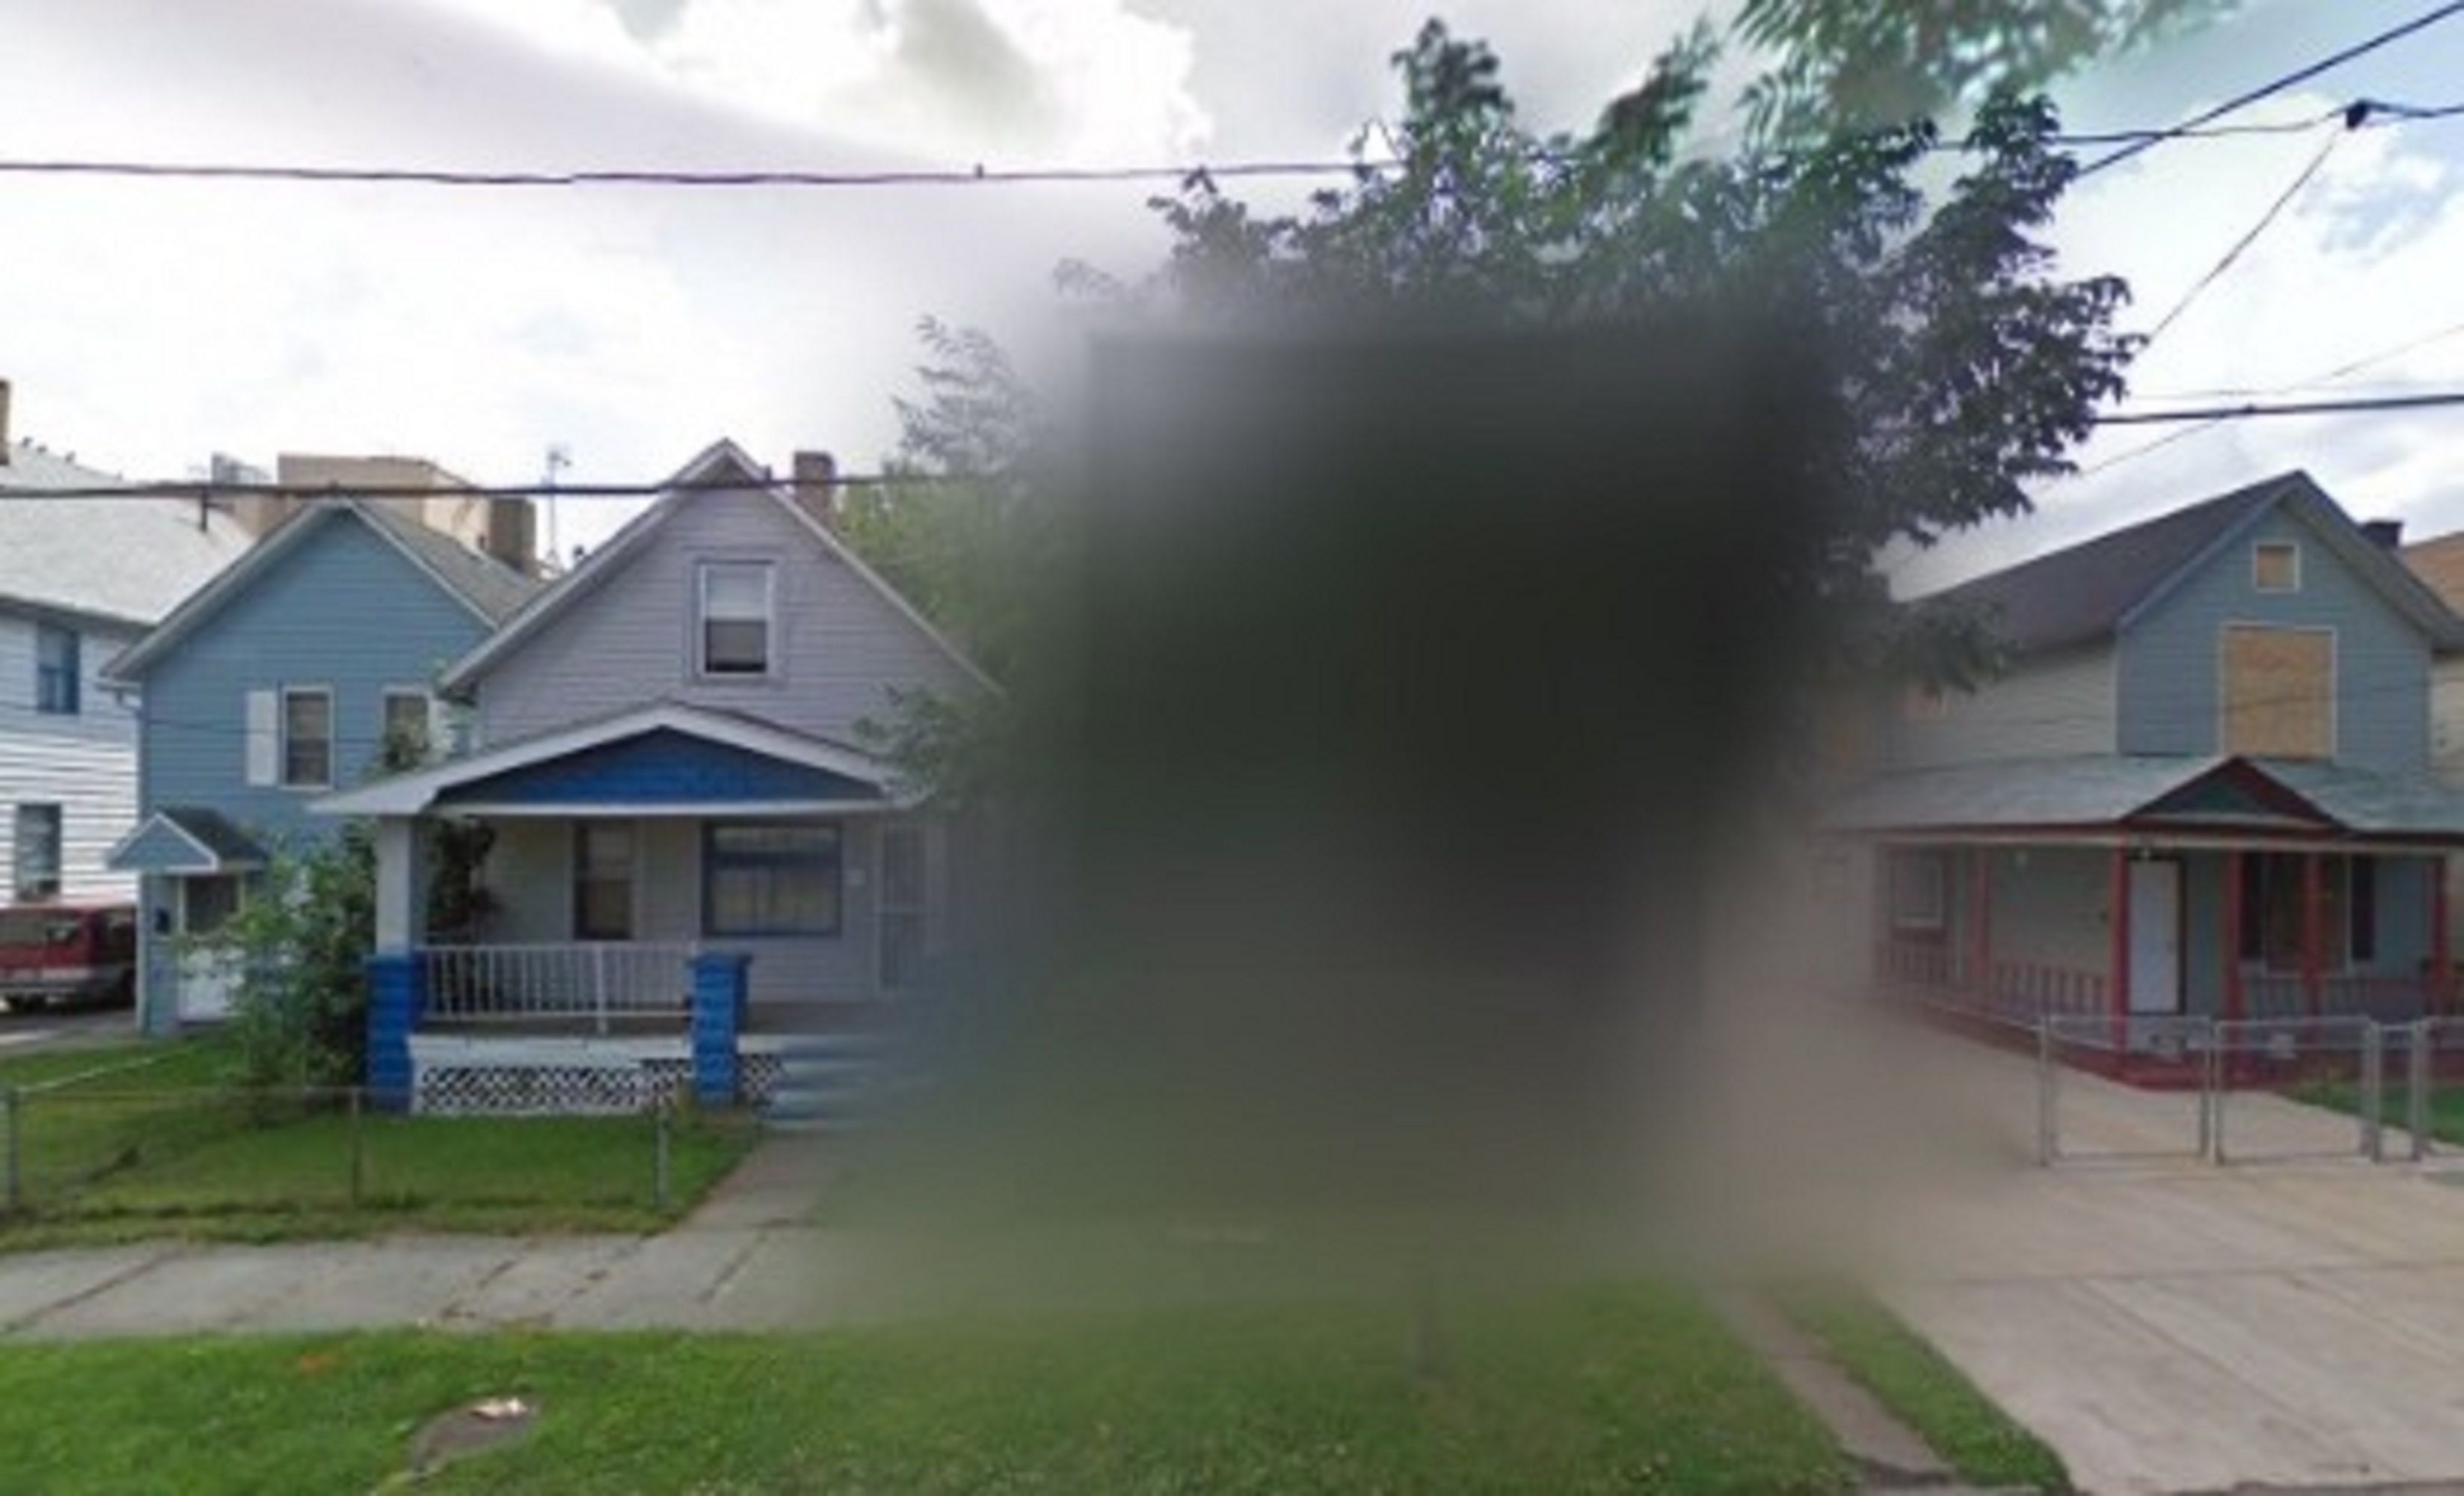 Casa Horroees Cleveland Difuminada Google Maps